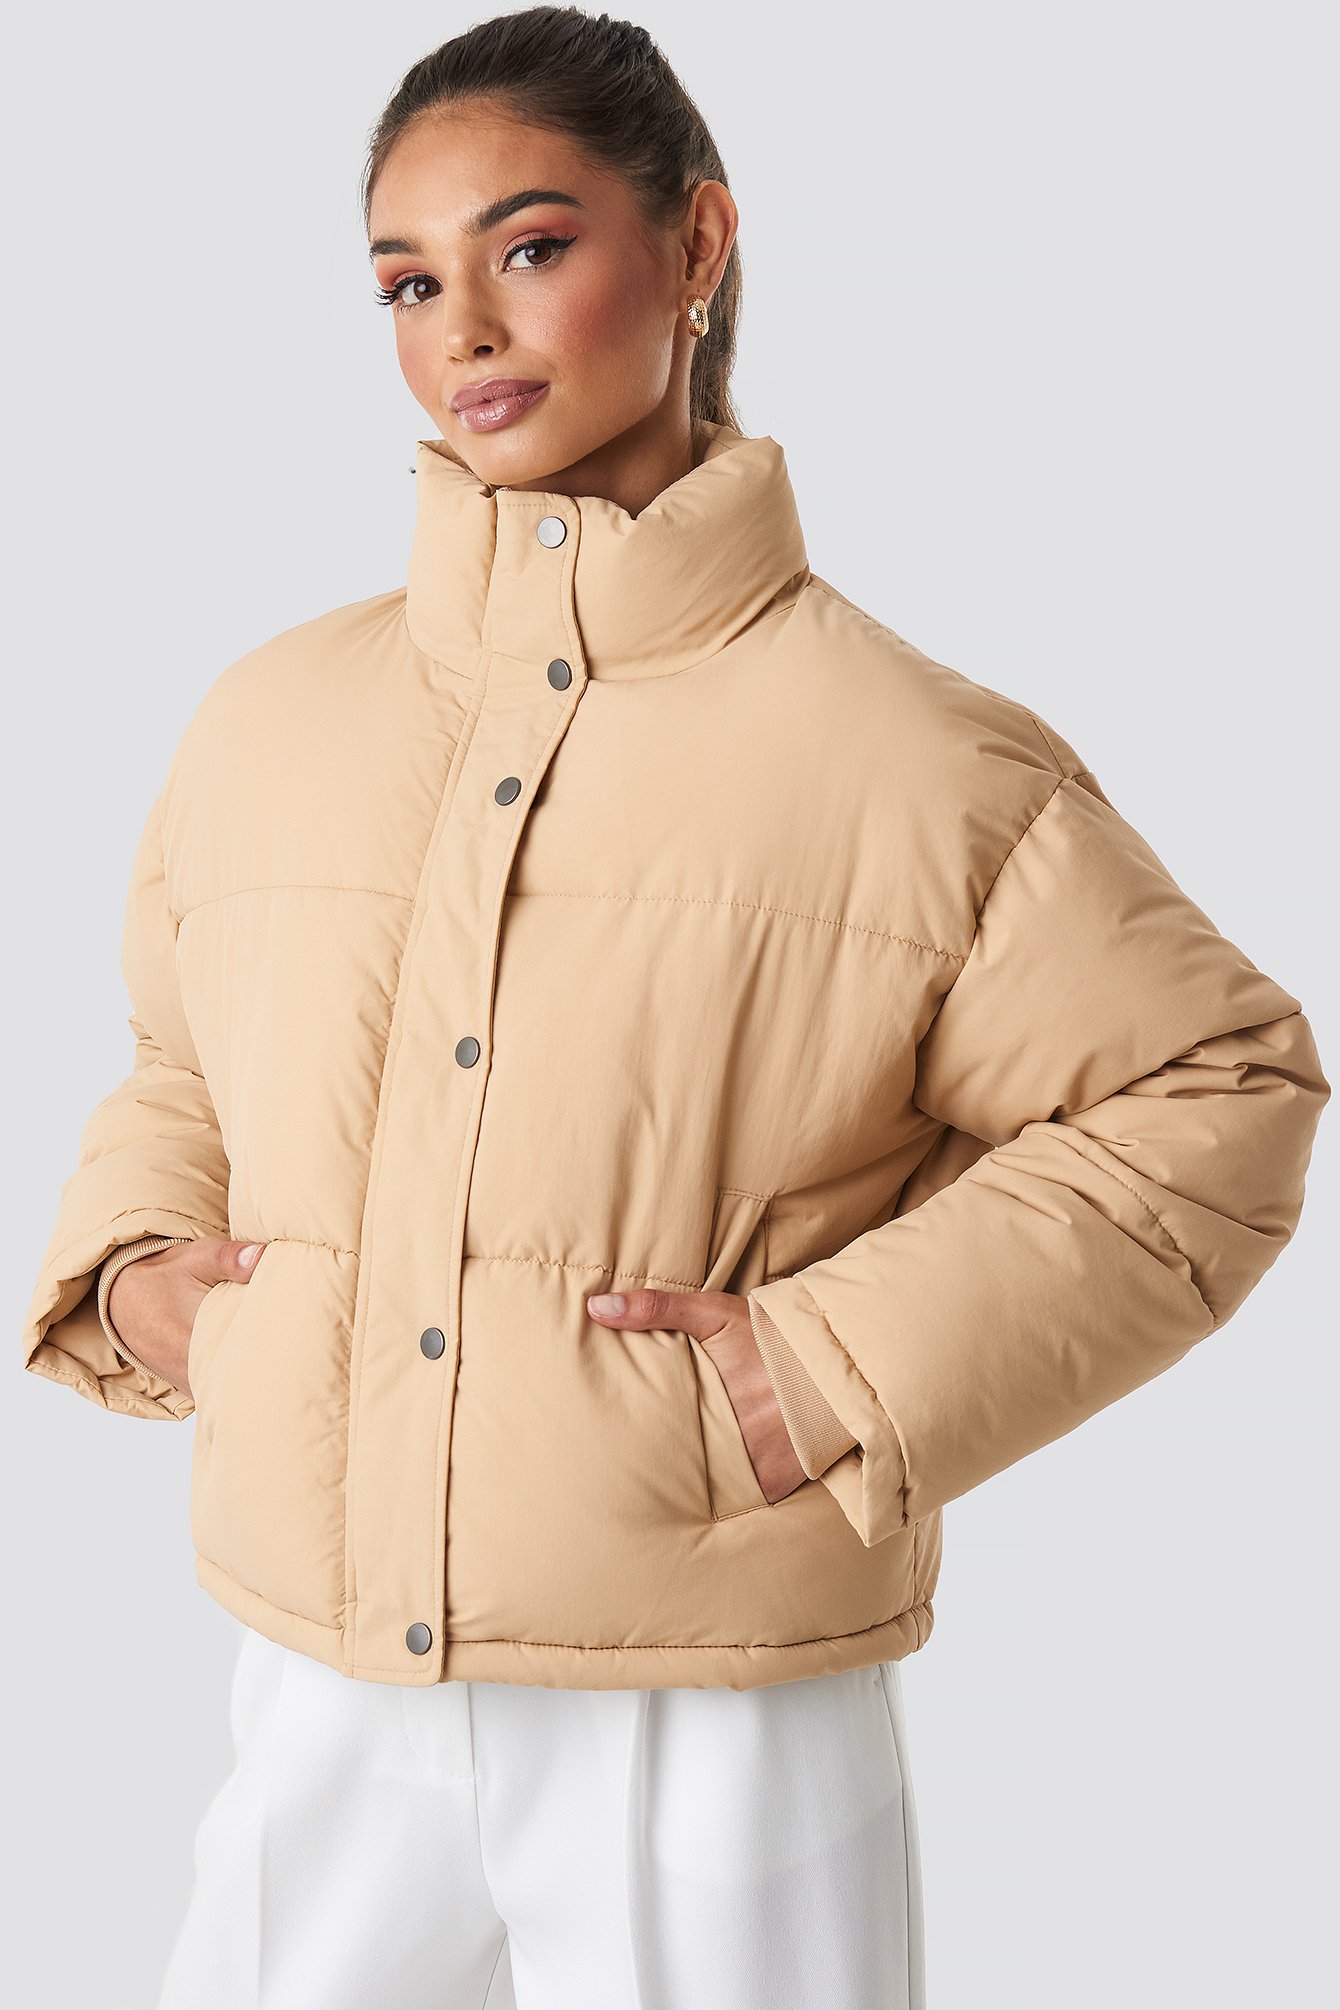 zara trafaluc outerwear division jacket